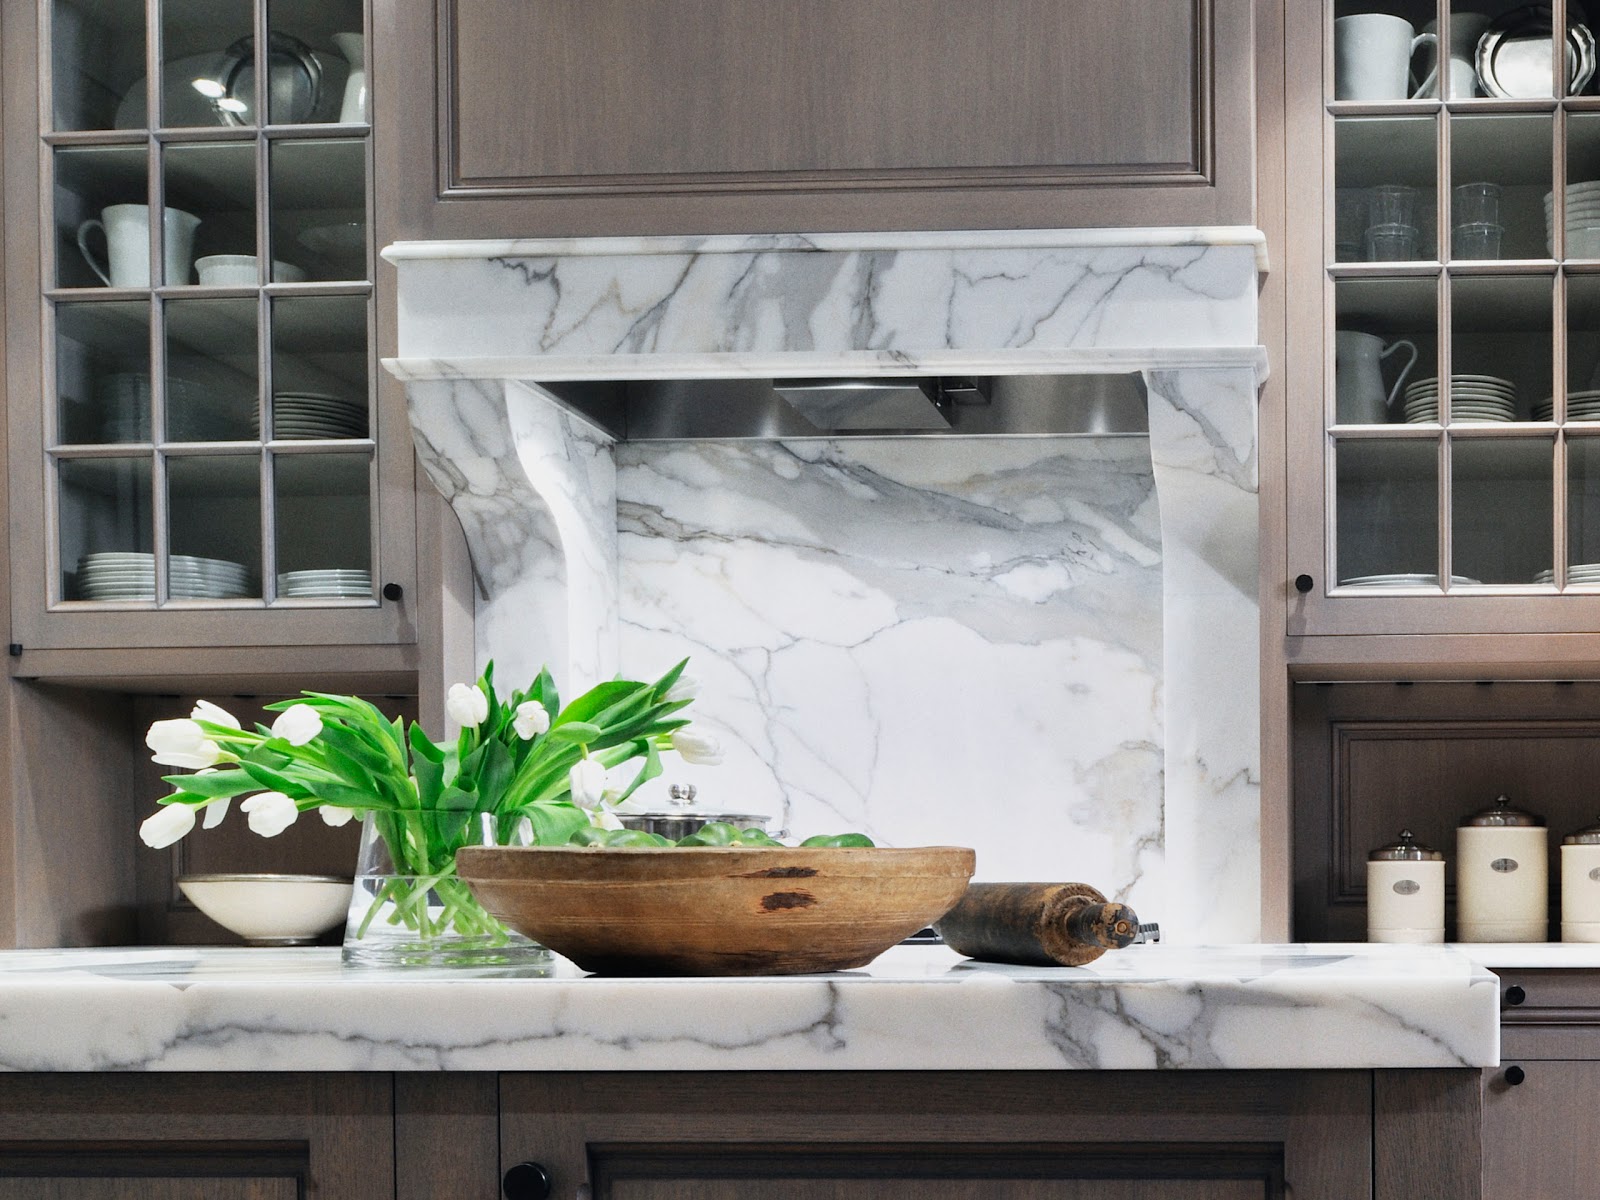 information about home design: Grey wash kitchen cabinets